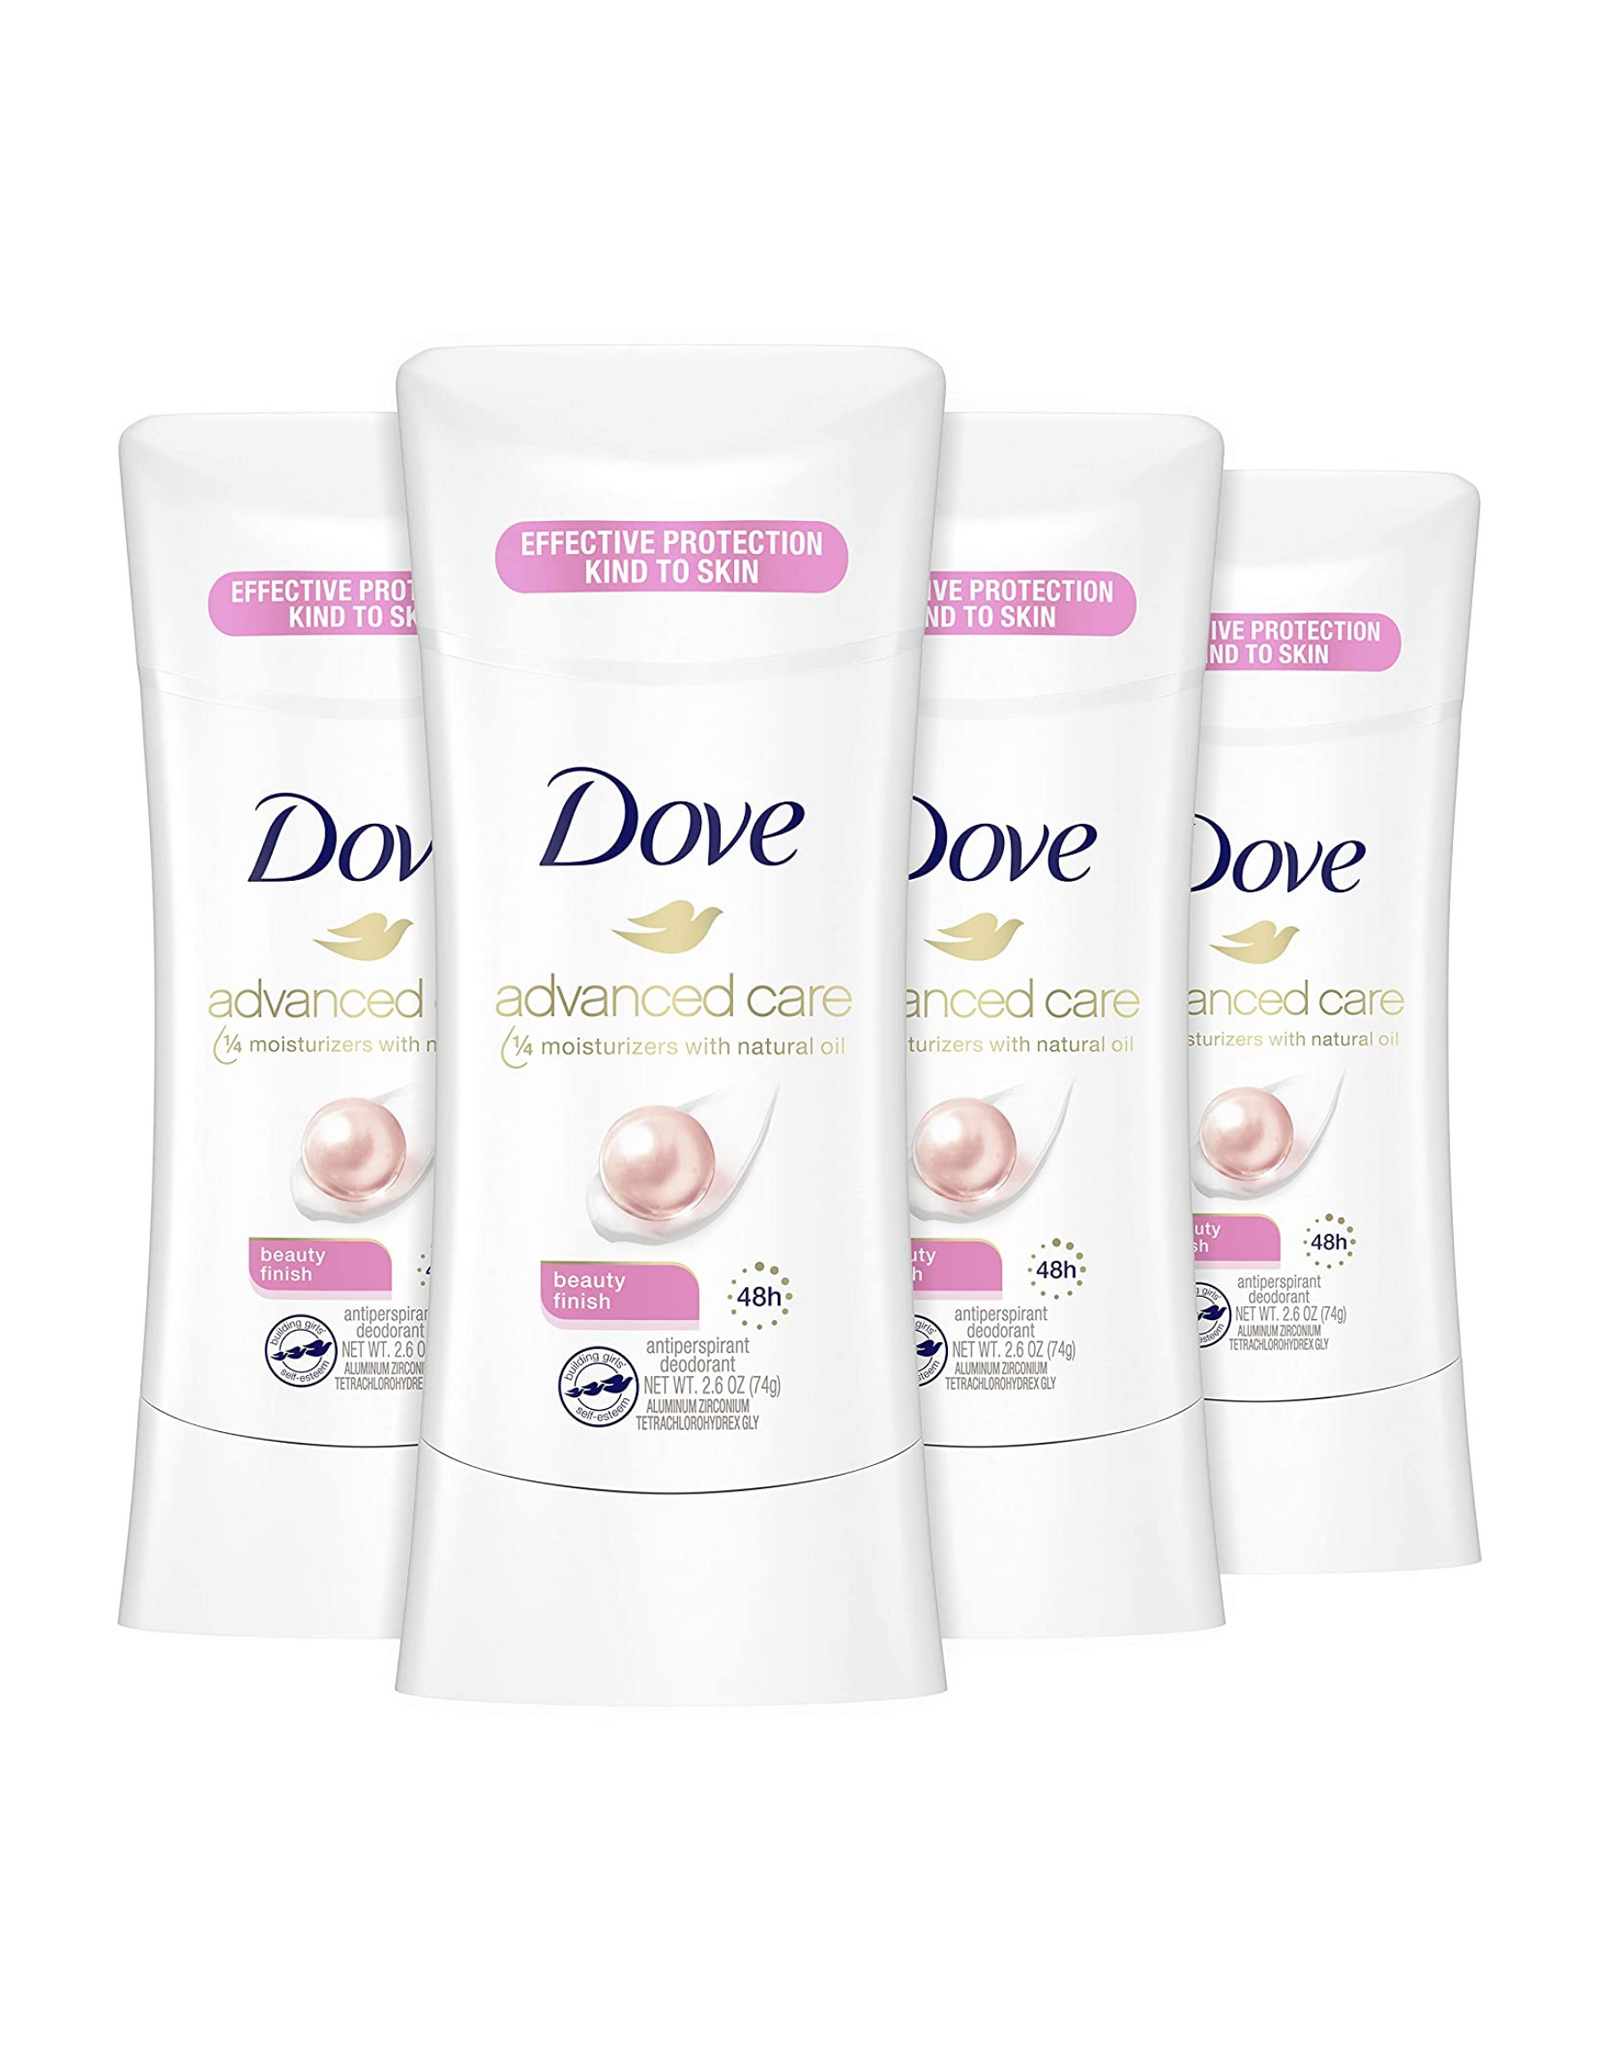 Dove Advanced Care Antiperspirant Deodorant Stick for Women, Beauty Finish, 2.6 oz, 4 Ct